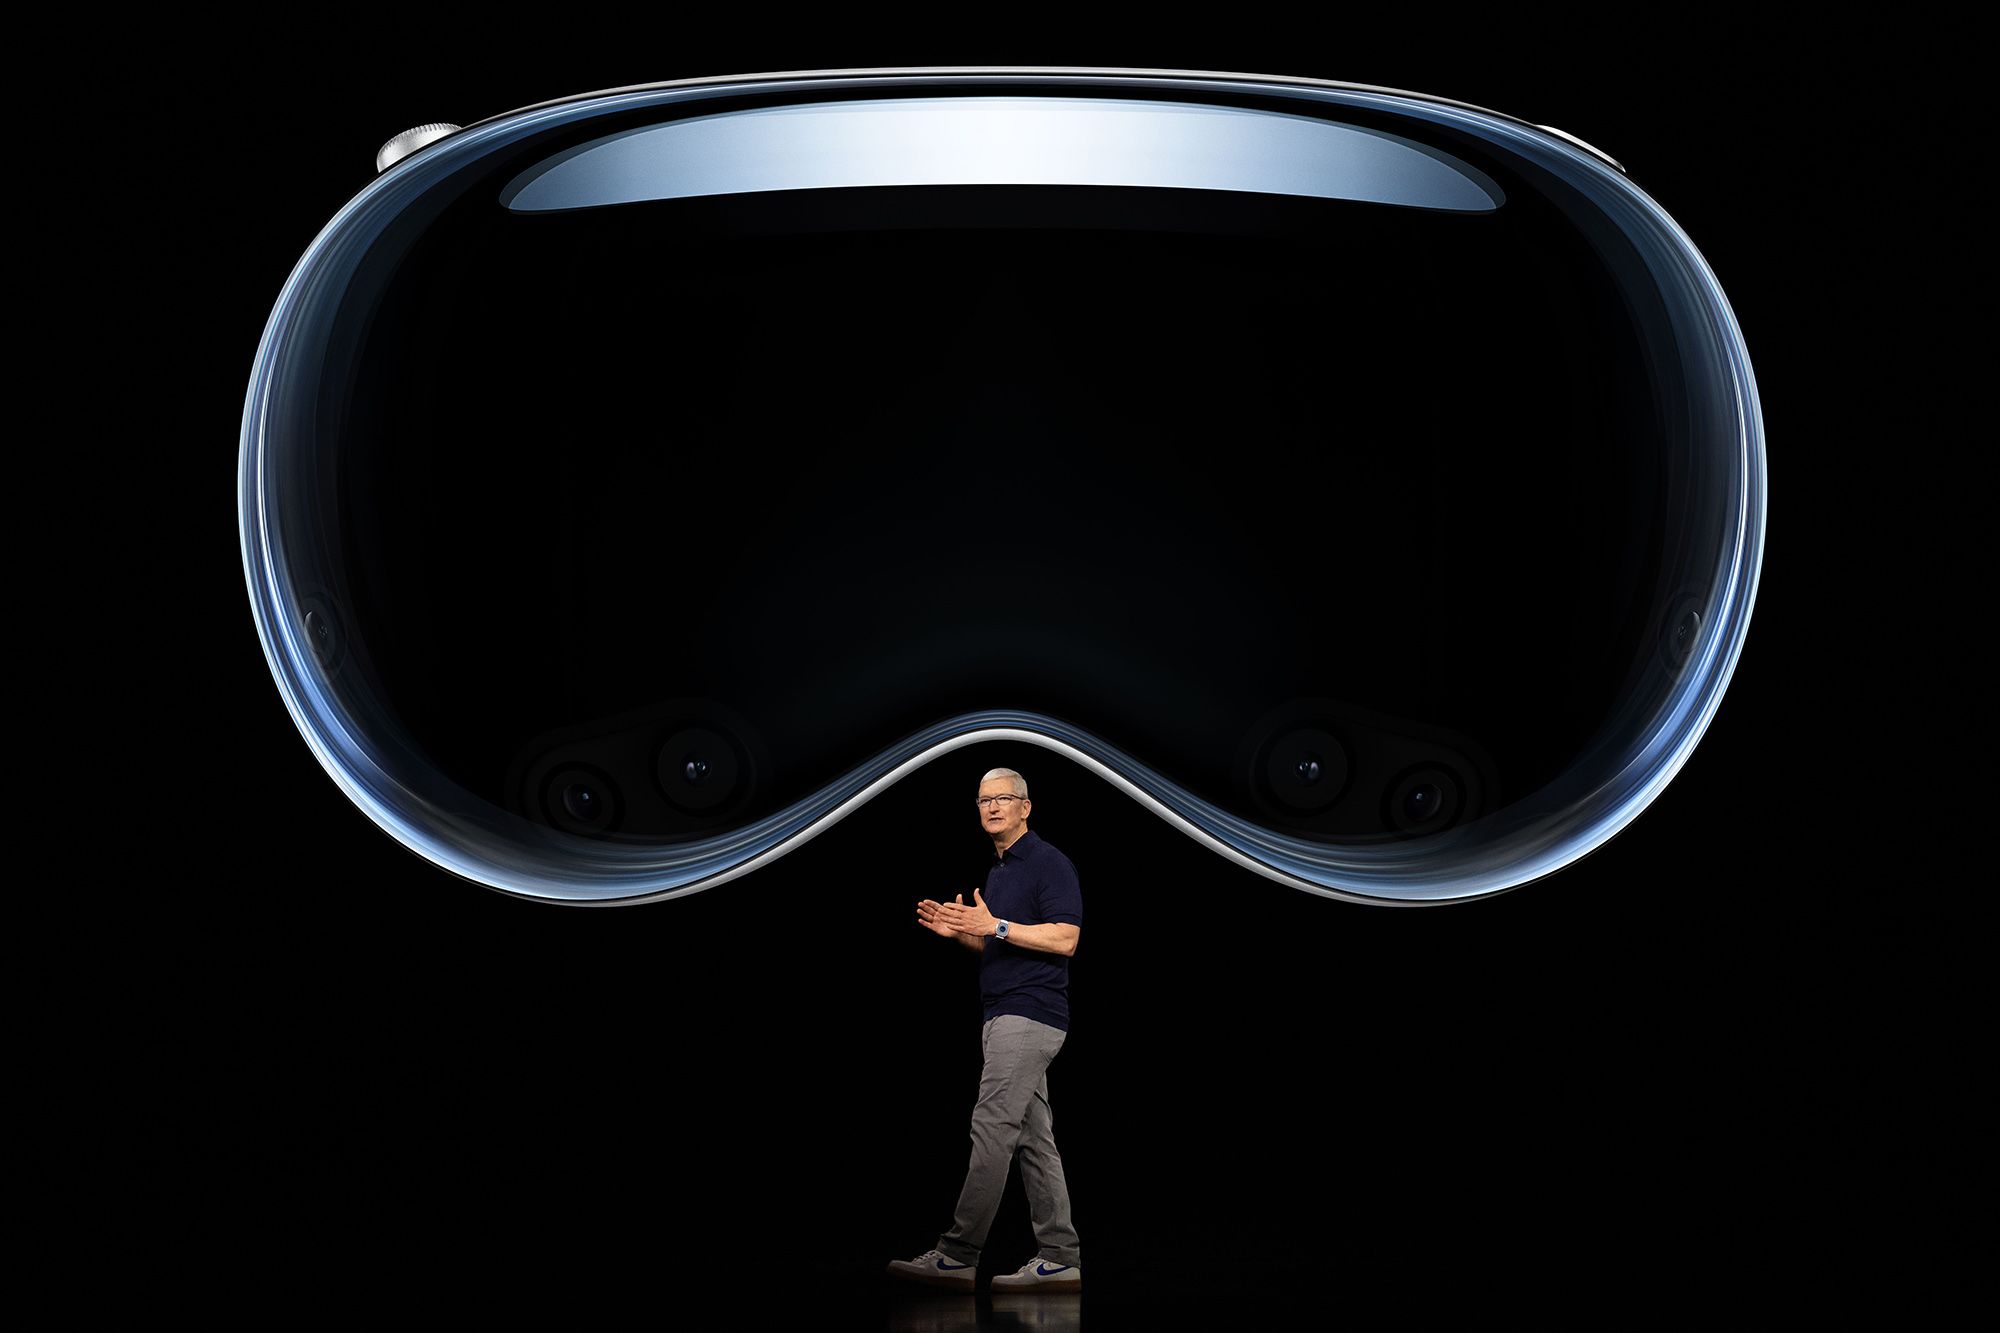 Elon Musk's Humorous Response to Apple's Vision Pro Price